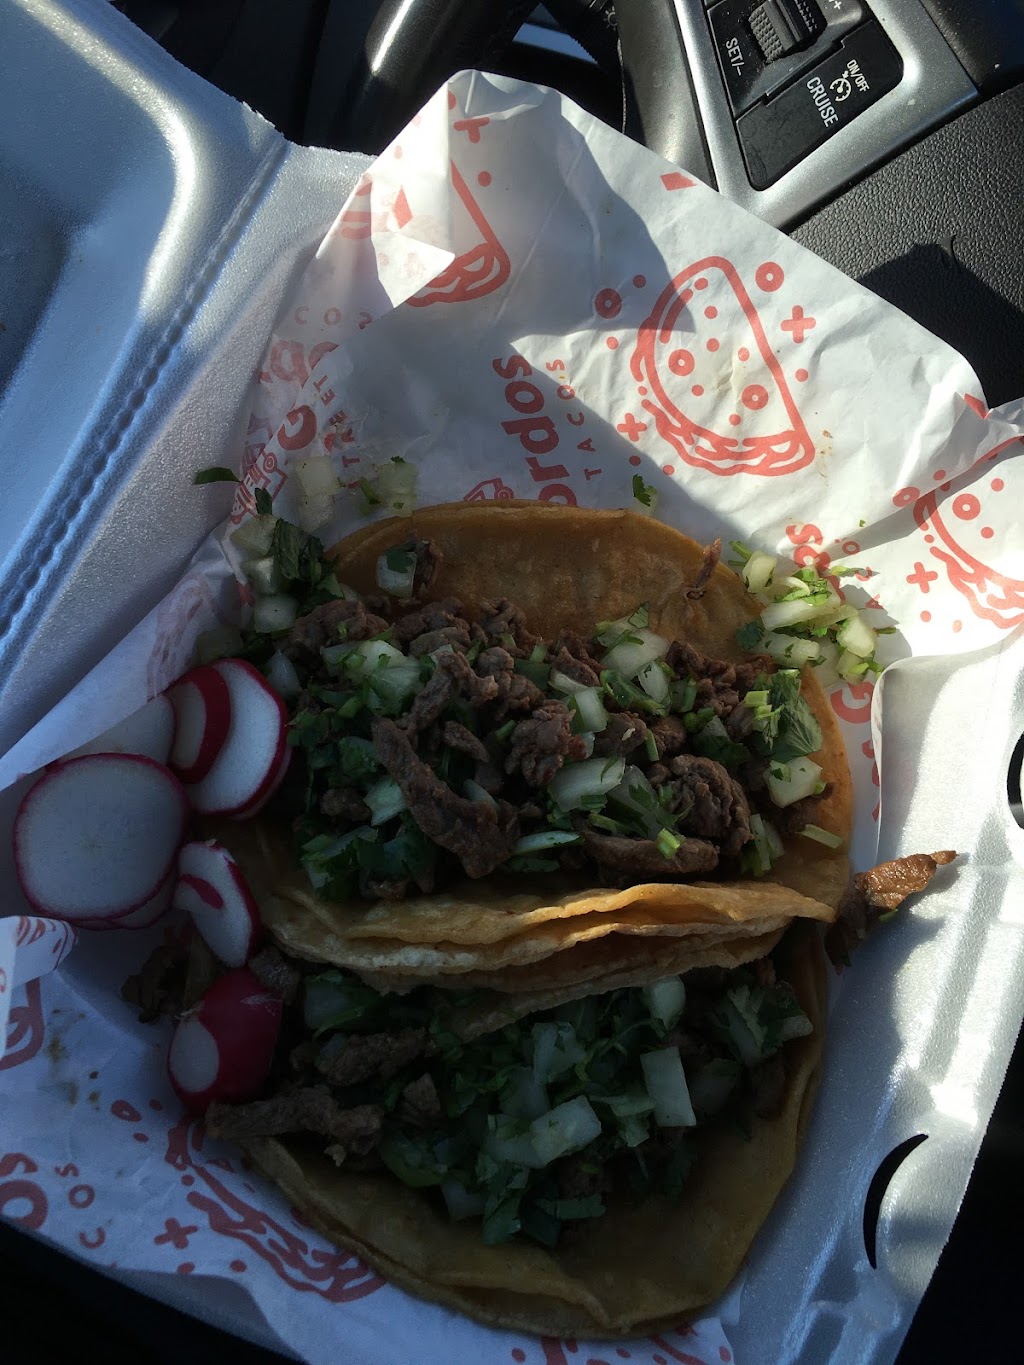 Los Gordos Street Tacos | 200 Marquis Pkwy, Williamsburg, VA 23185, USA | Phone: (757) 778-7399